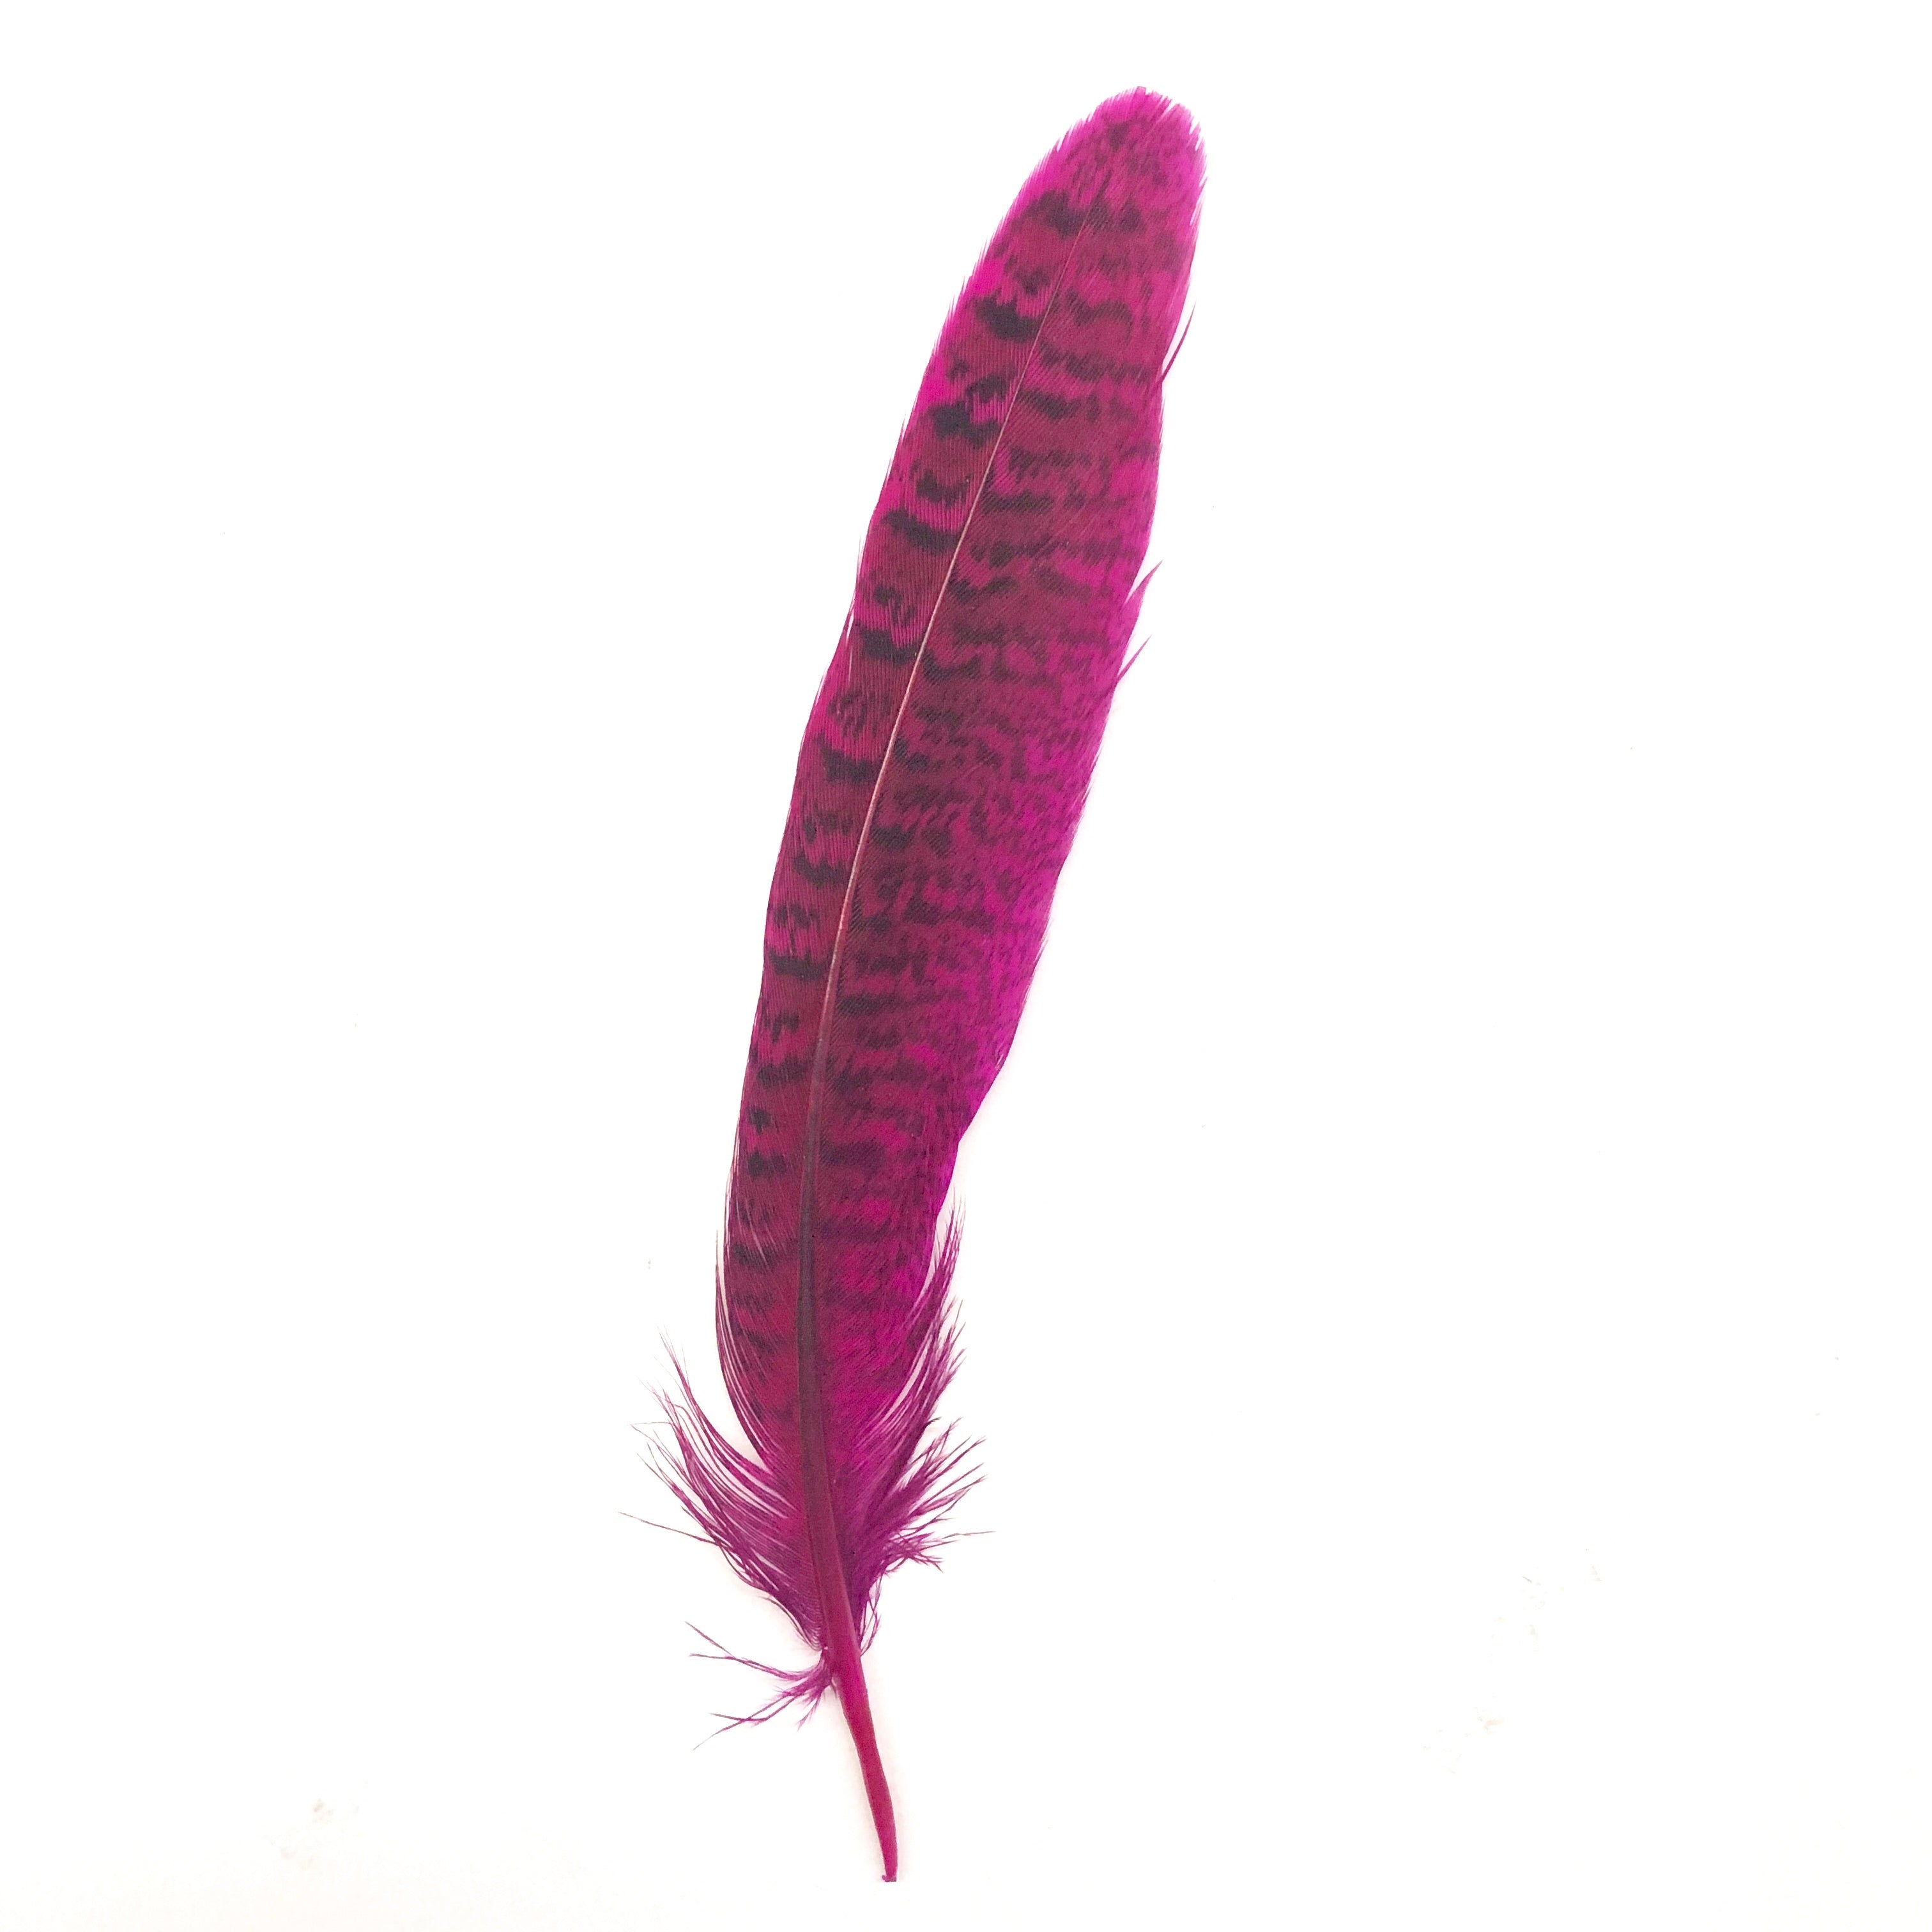 Under 6" Golden Pheasant Side Tail Feather x 10 pcs - Cerise